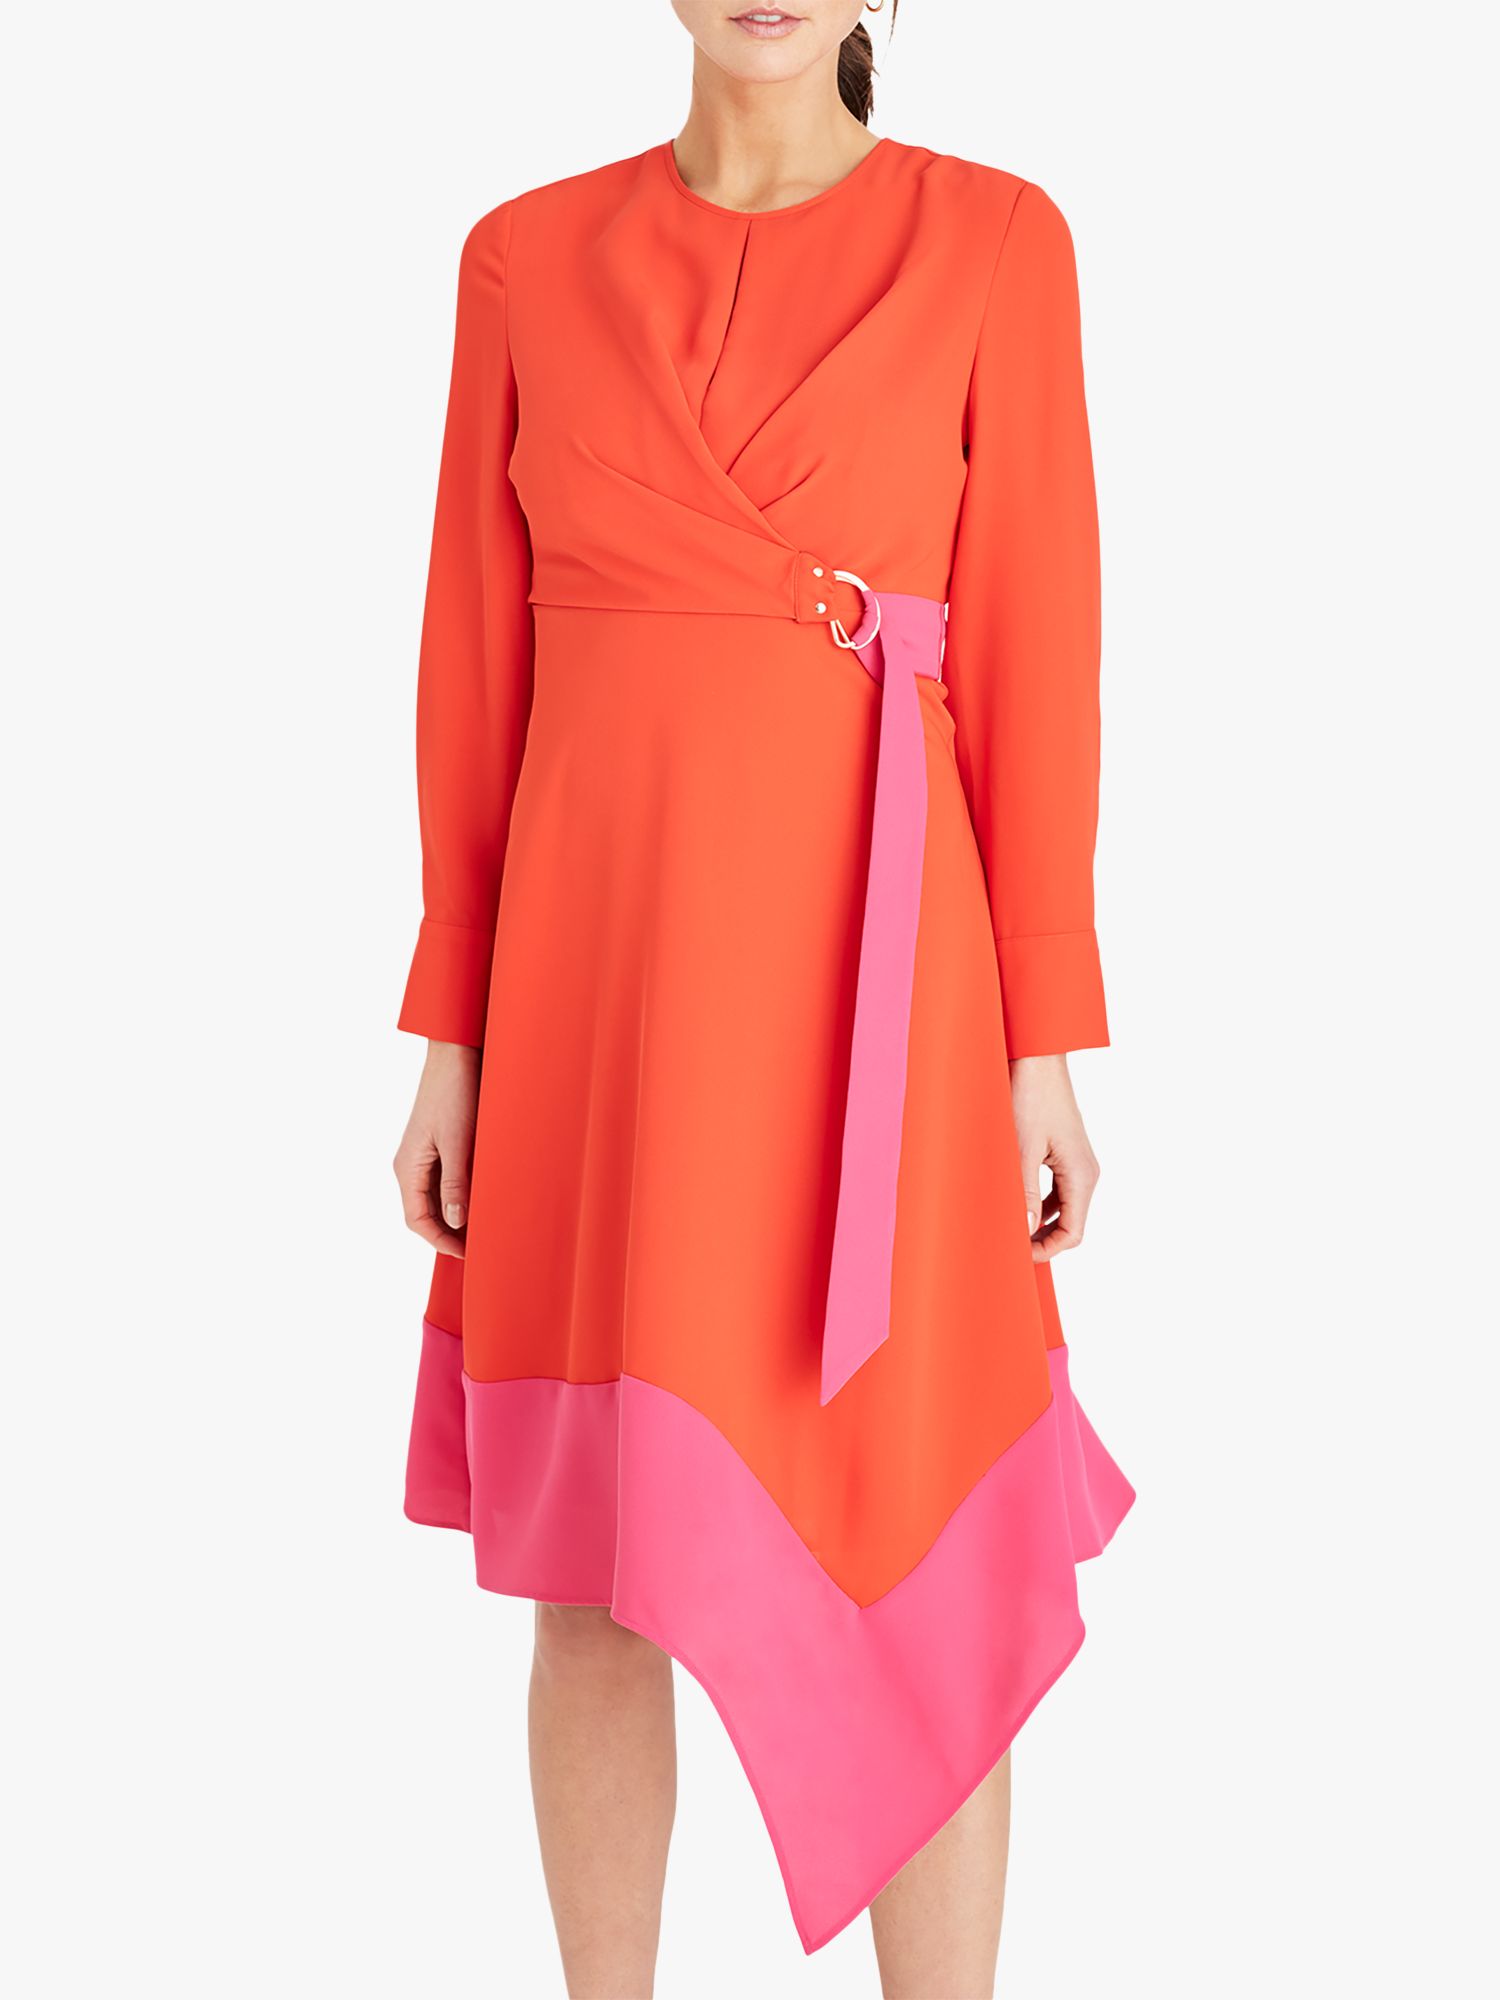 Damsel in a Dress Eria Wrap Dress, Orange/Pink at John Lewis \u0026 Partners